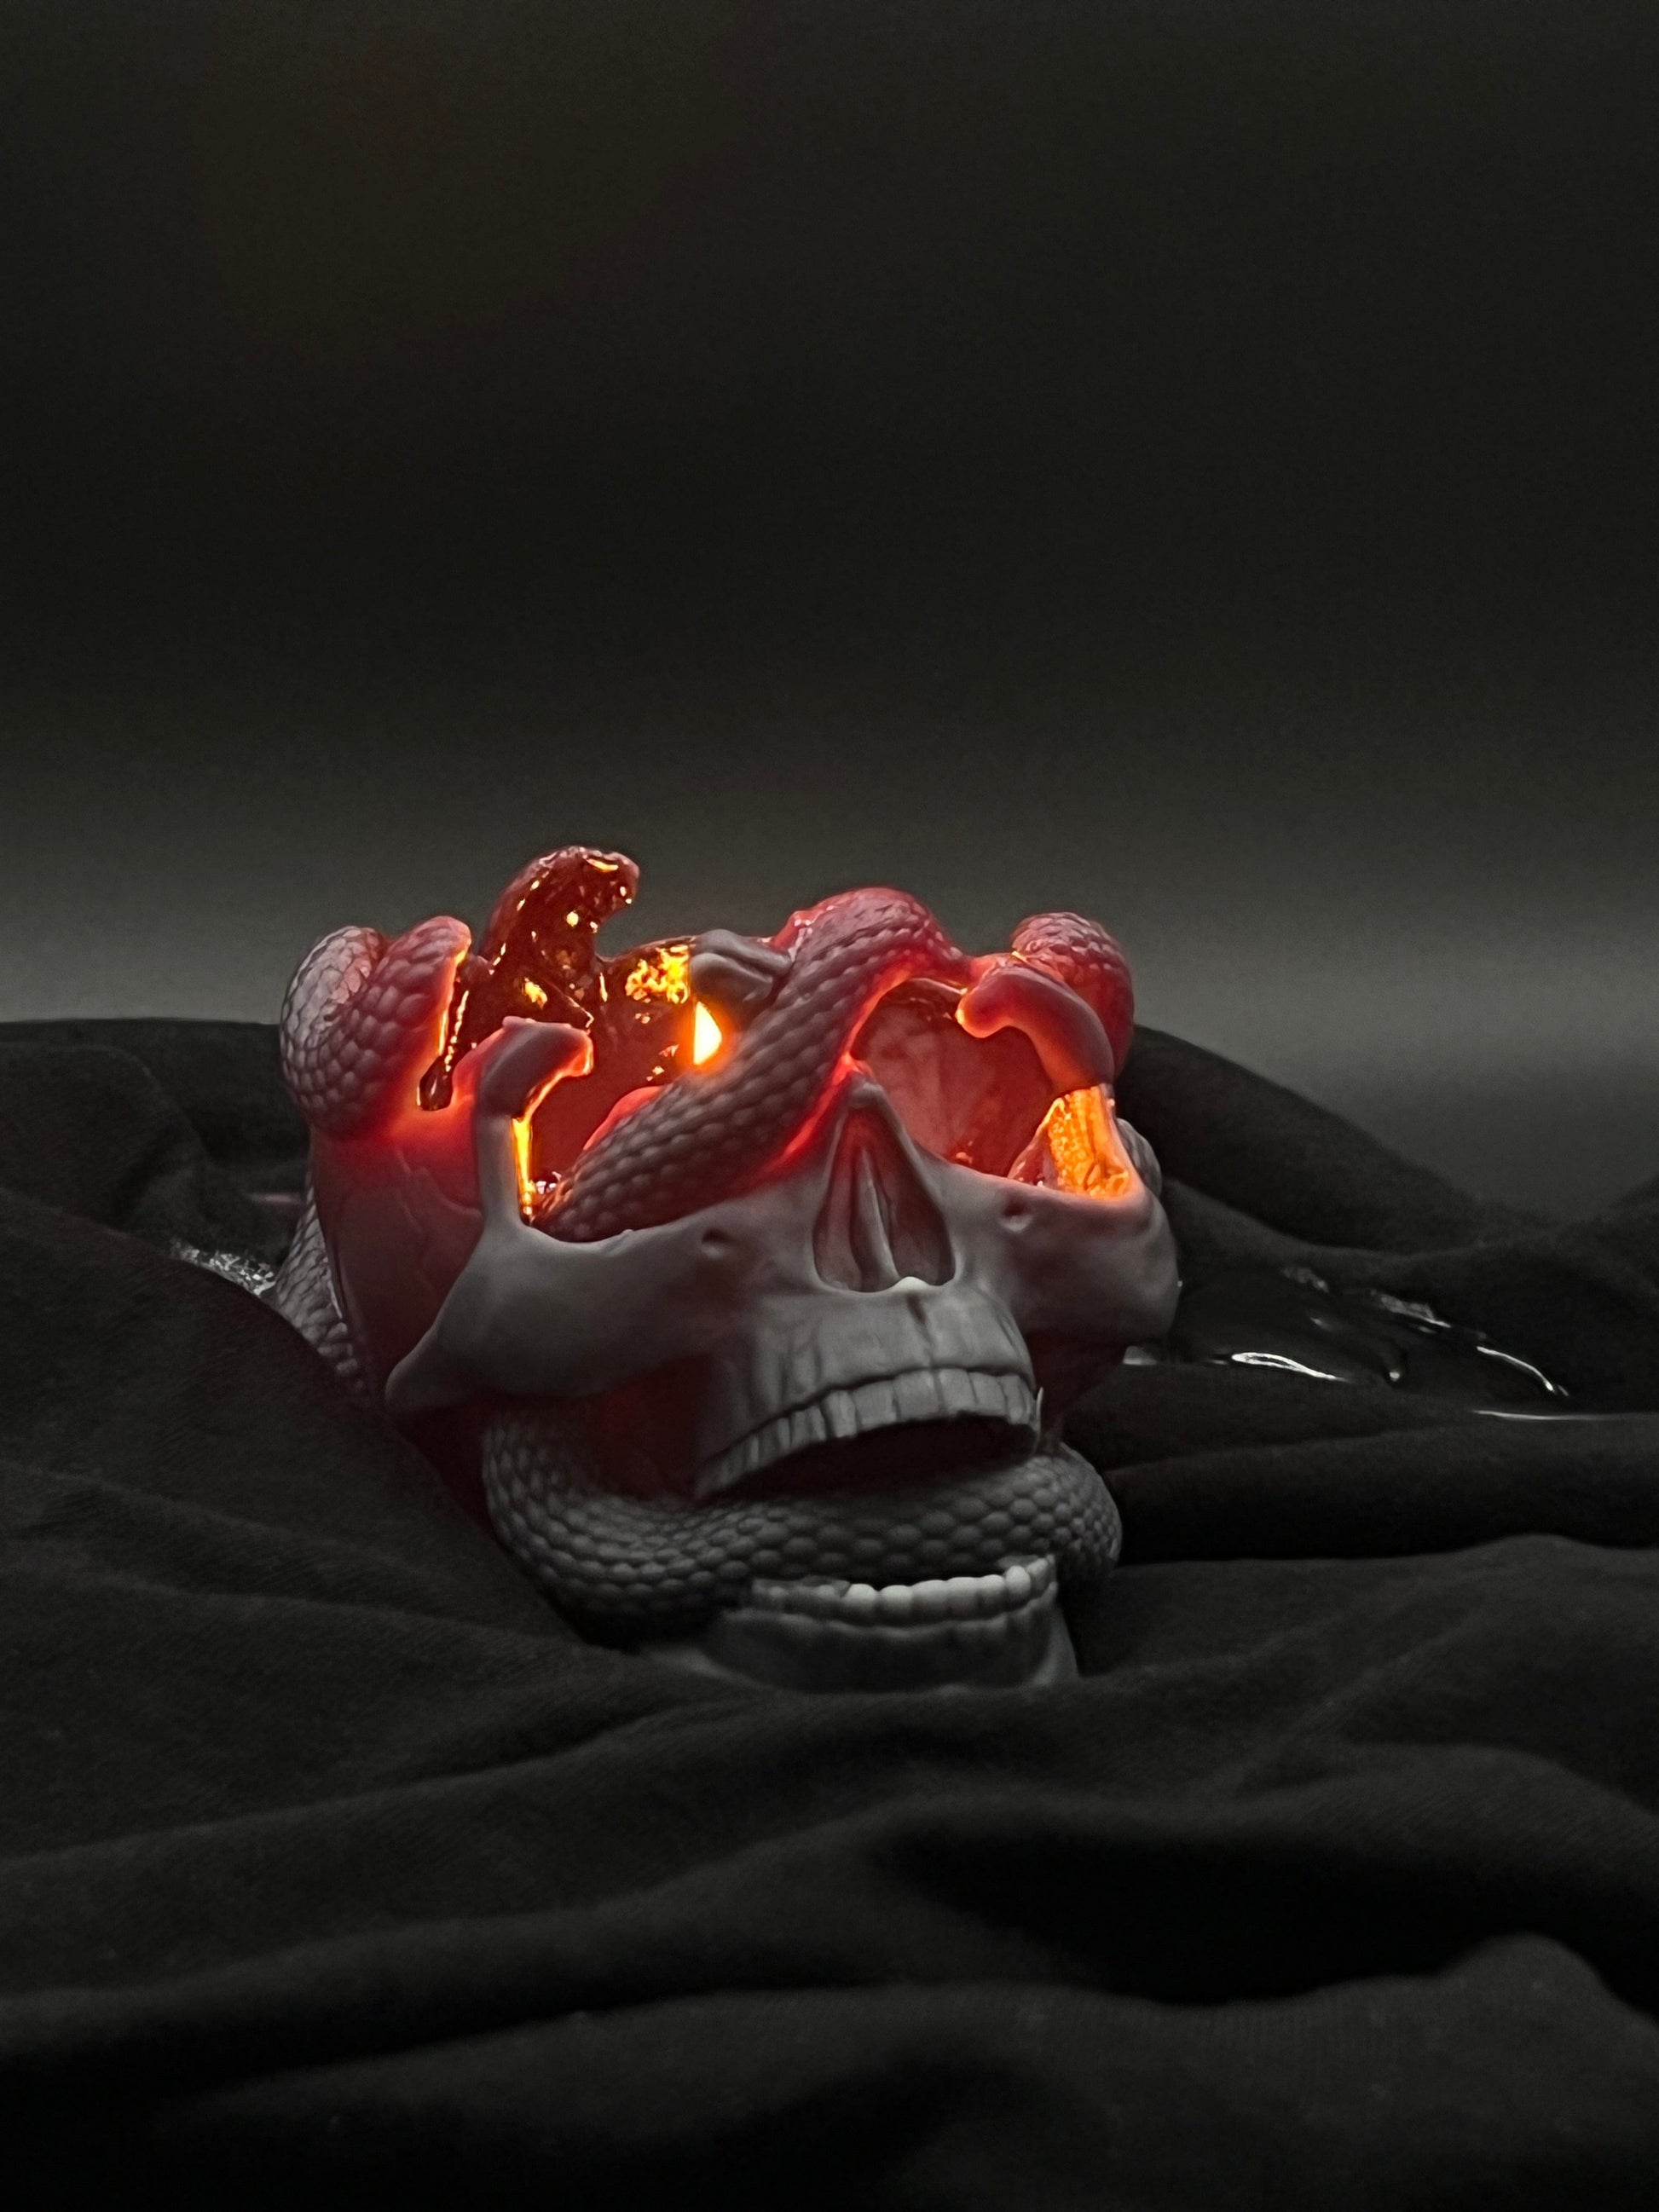 Skull Blood Candles - Halloween Bleeding Dripping Red Wax, Skeleton, Gothic  Goth Gift Magic Skulls Candlestick Spooky Ghost Bar Decoration, Bleeding